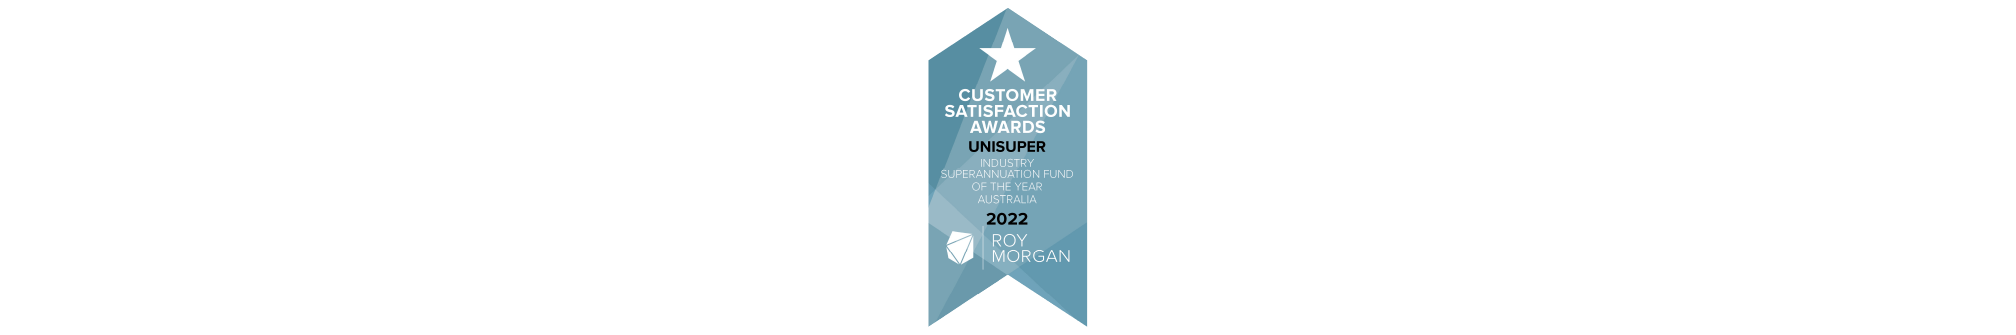 Roy Morgan customer service award 2022